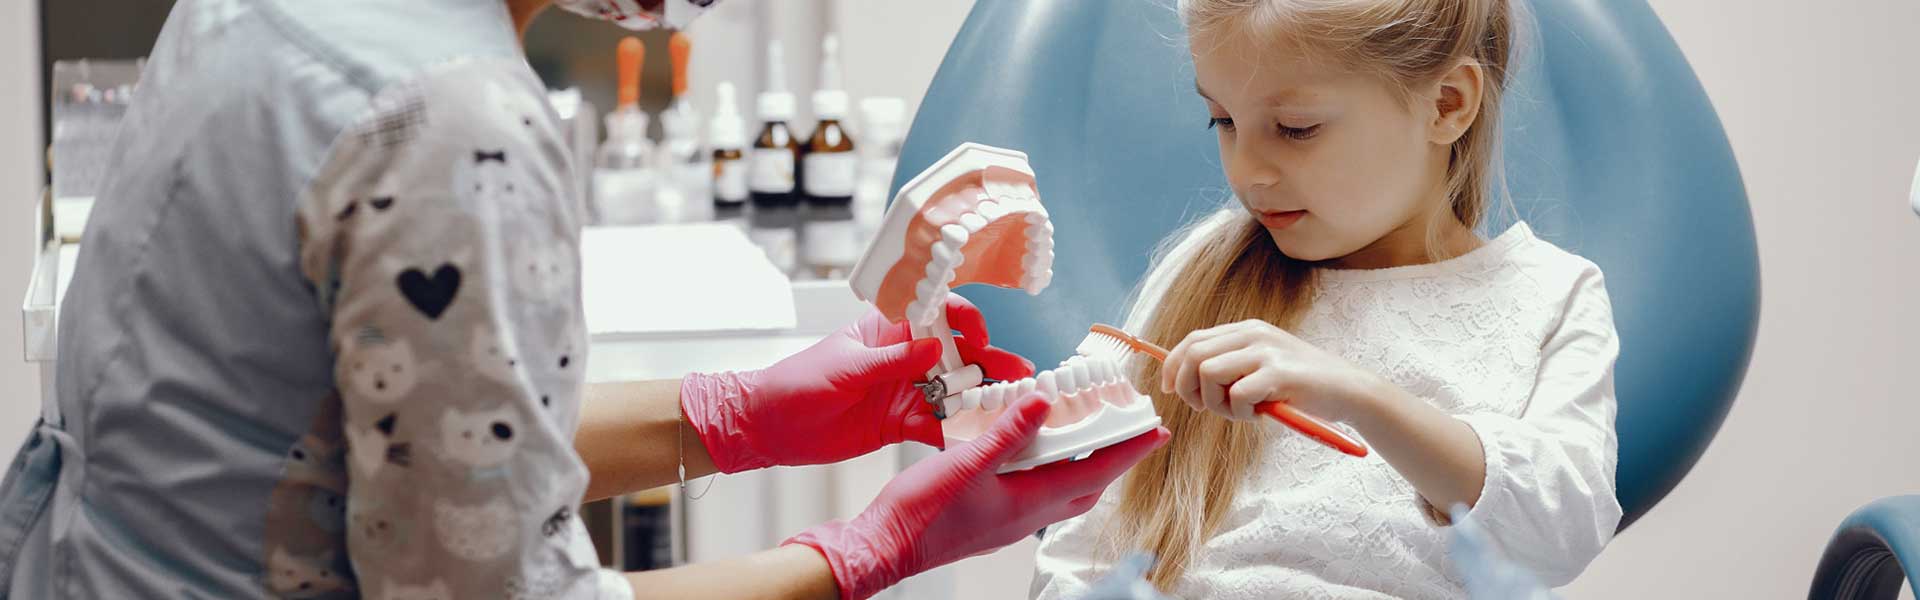 Odontopediatría - Dudas y preguntas frecuentes - Niños - Clínica dental Brasilocho - Clínica dental Cádiz - Odontología - Dentistas en Cádiz